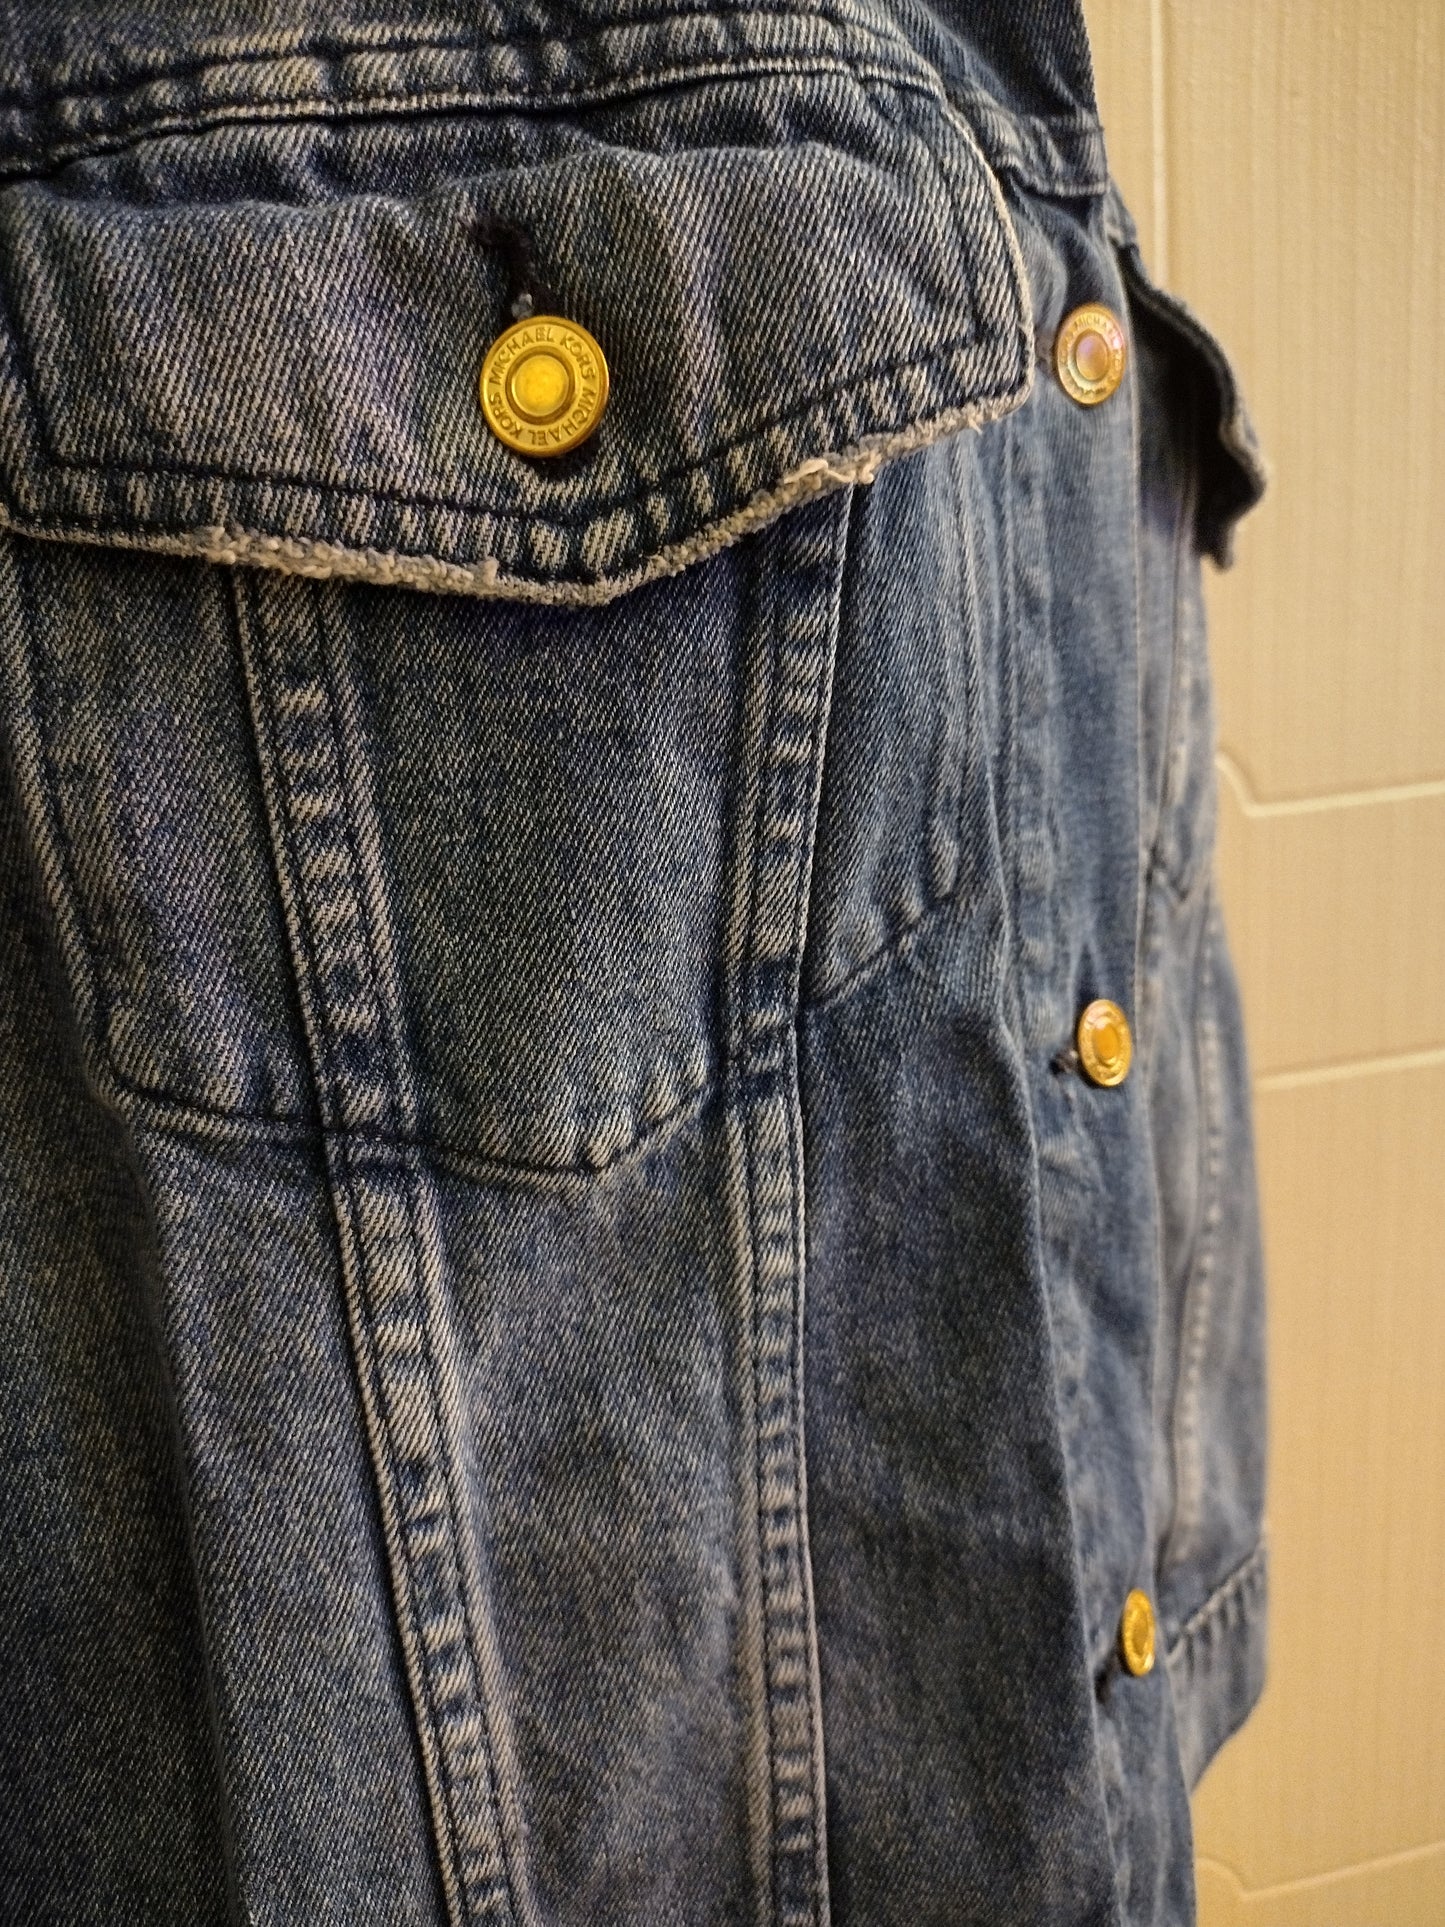 Michael Kors Women's Denim Button Down Jean Jacket - Low Rise Long Sleeve